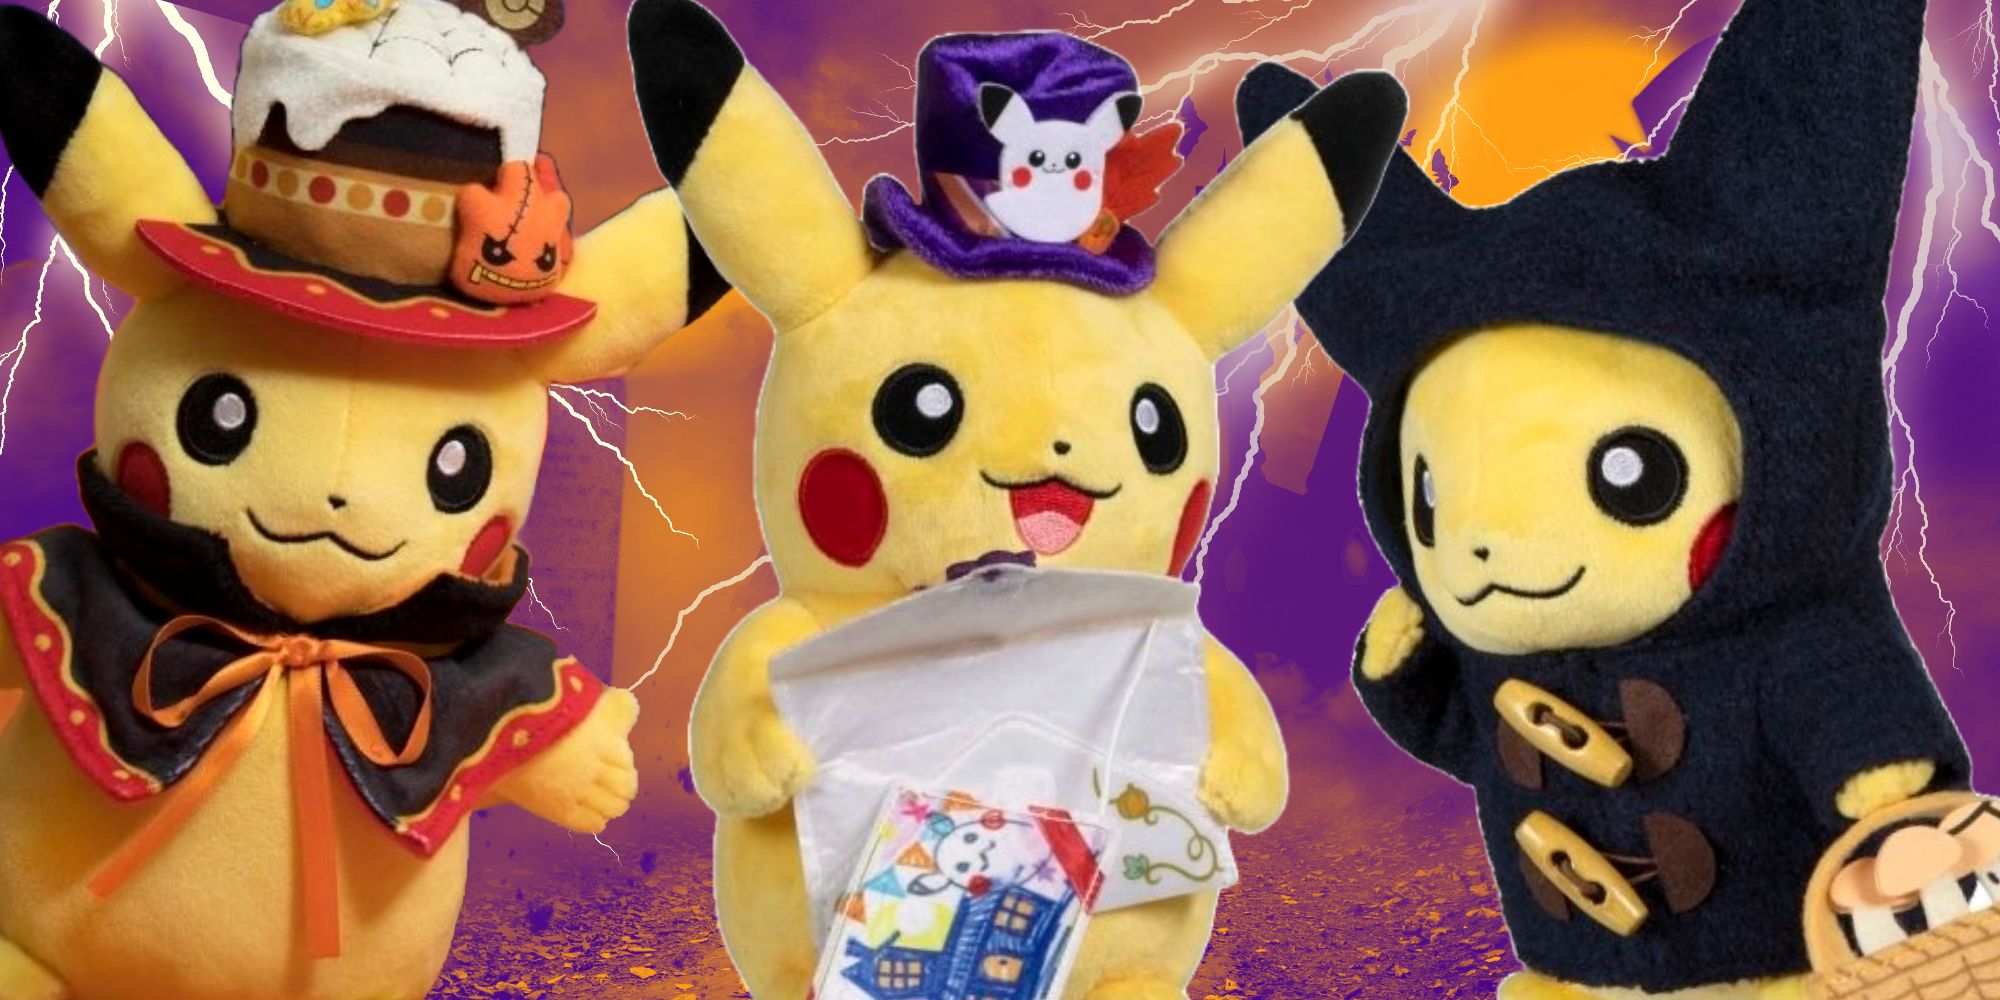 Pokémon Tricks & Treats 2023: Pikachu Wearing Pumpkin Costume Plush - 8 ¼  in.